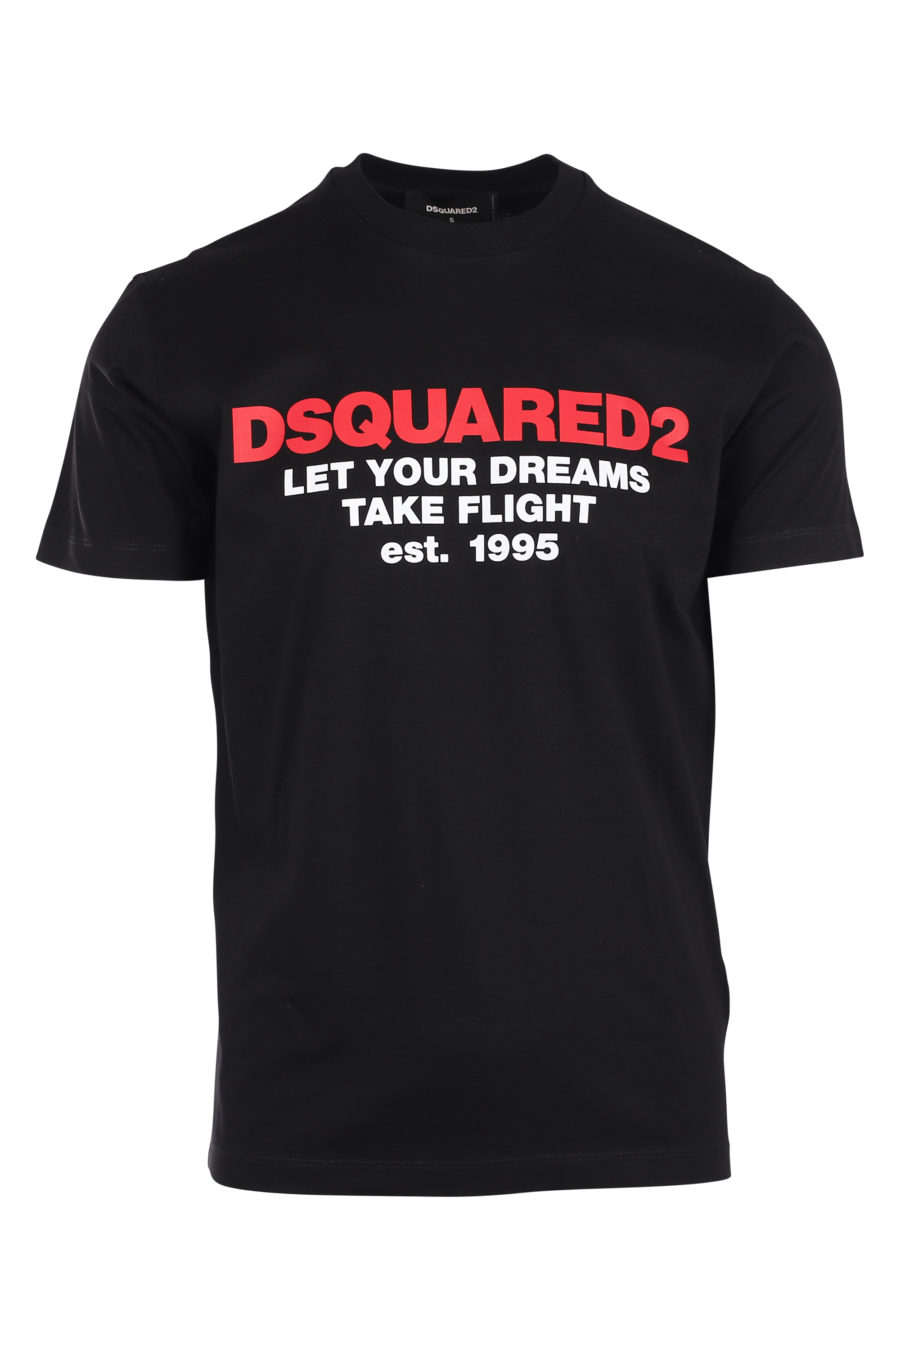 Camiseta negra con logo rojo "let your dreams take flight" - IMG 9861